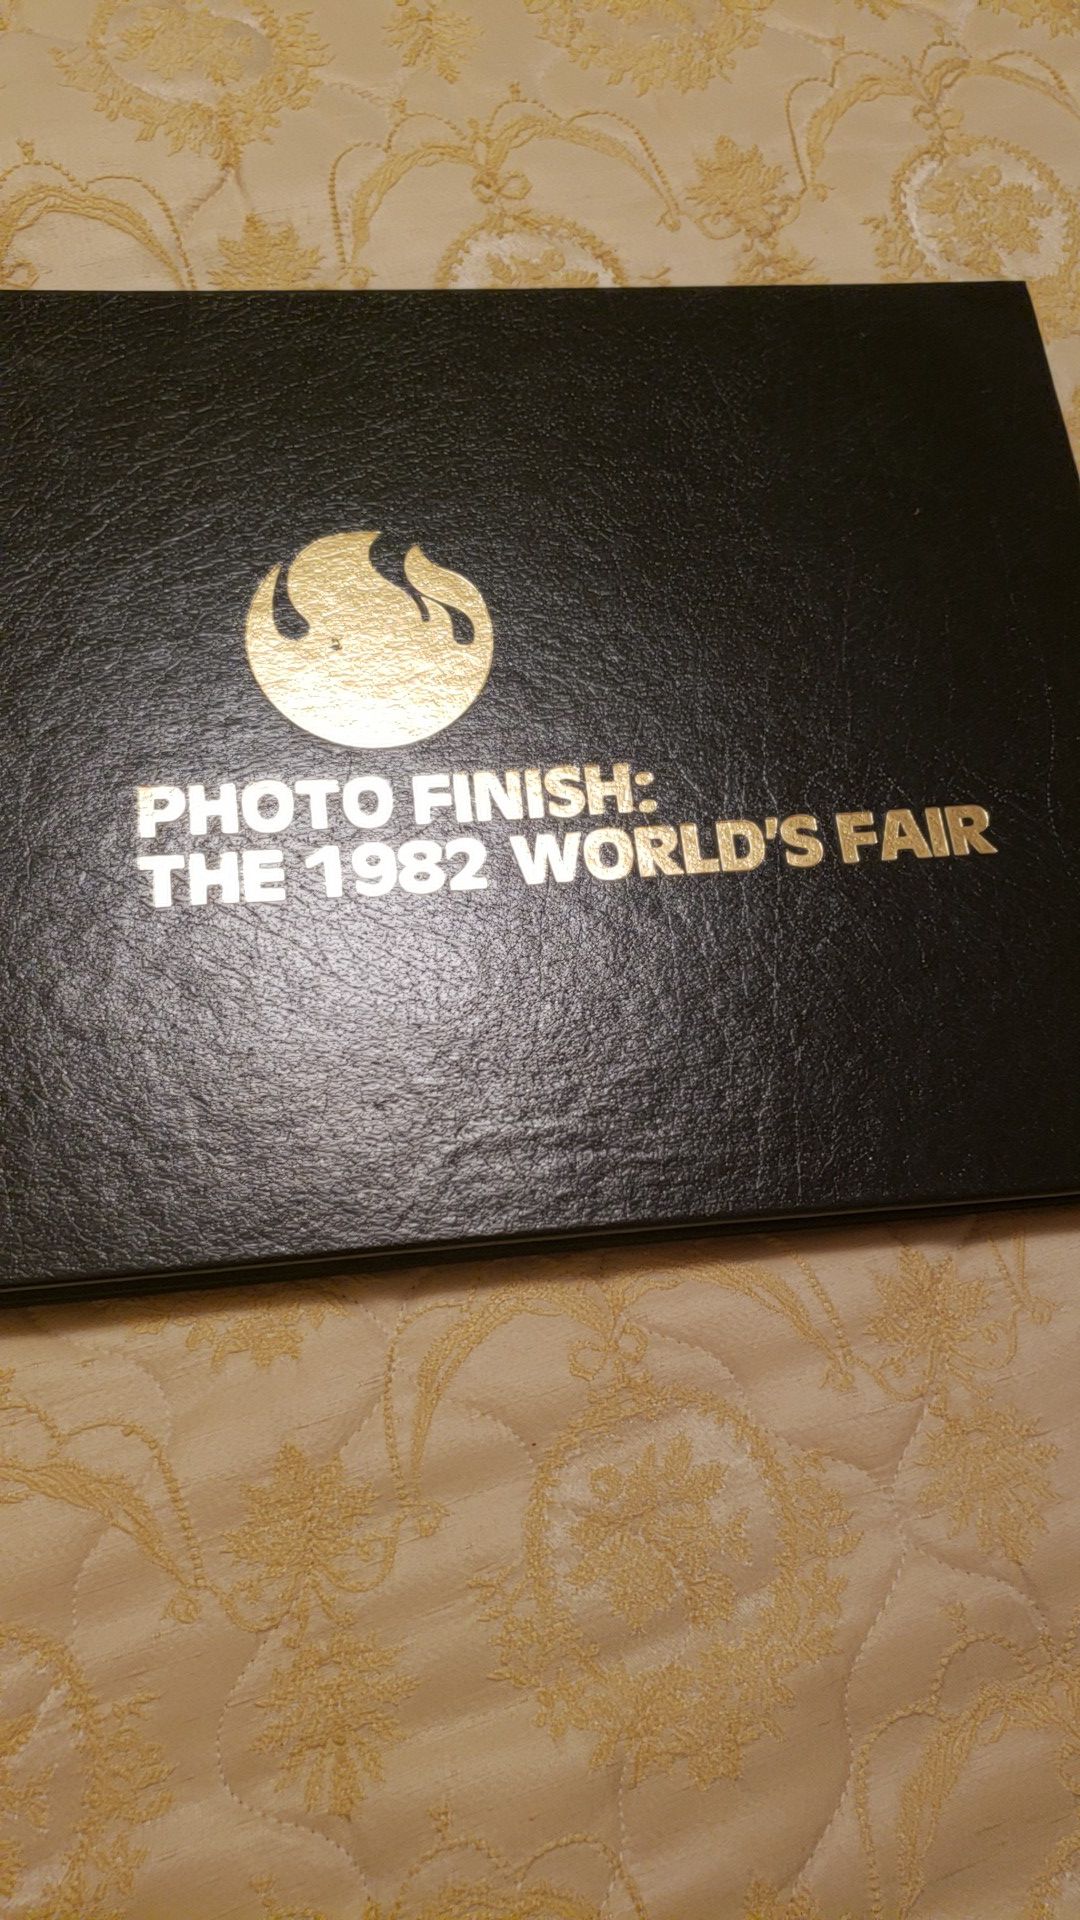 1982 world's fair picture book